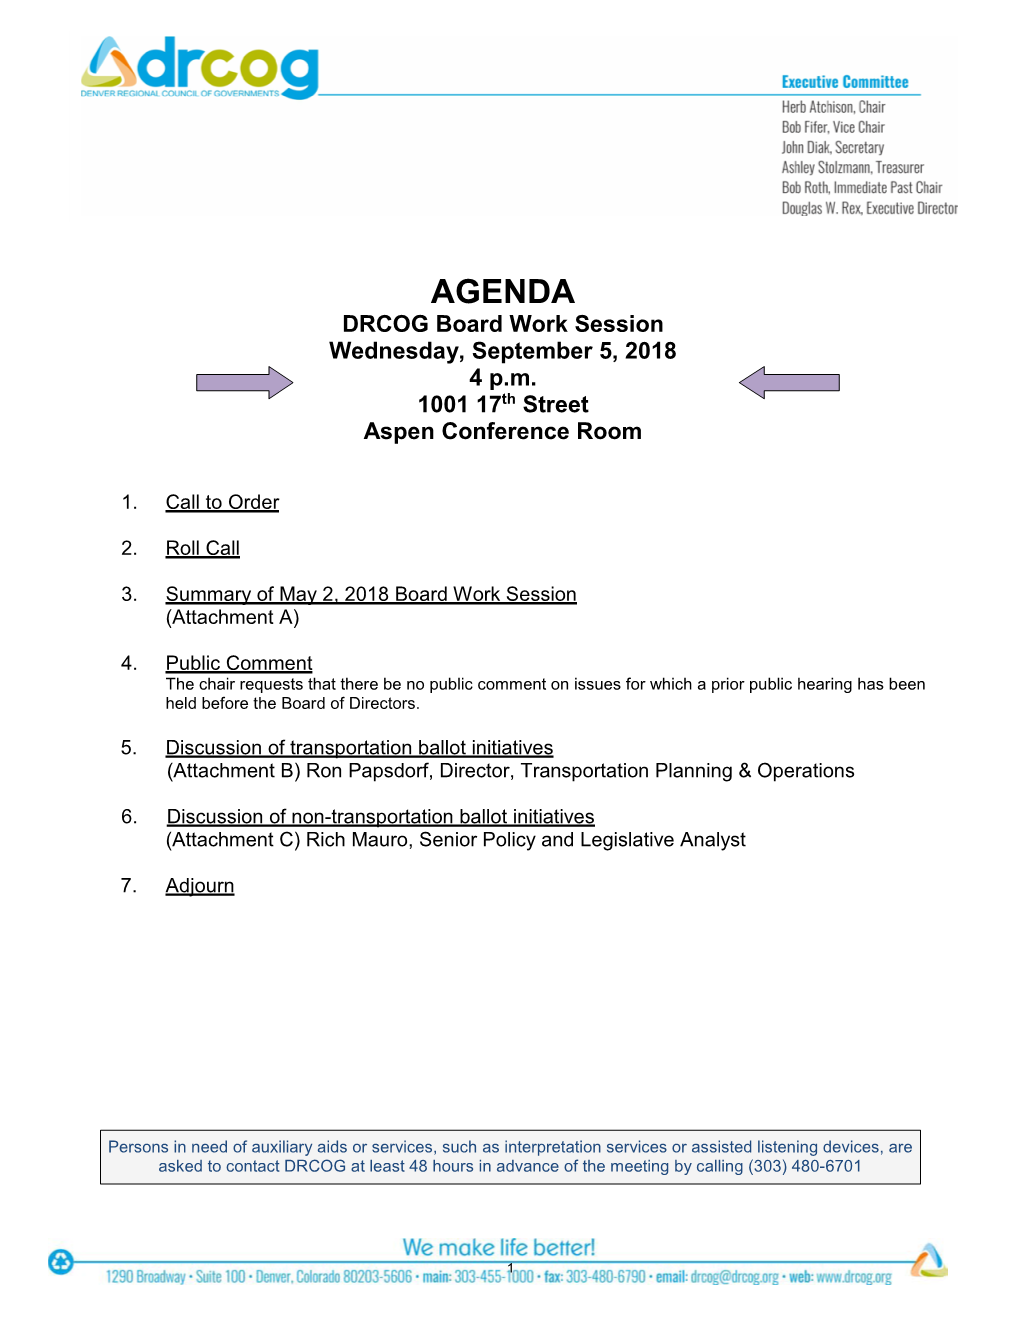 AGENDA DRCOG Board Work Session Wednesday, September 5, 2018 4 P.M